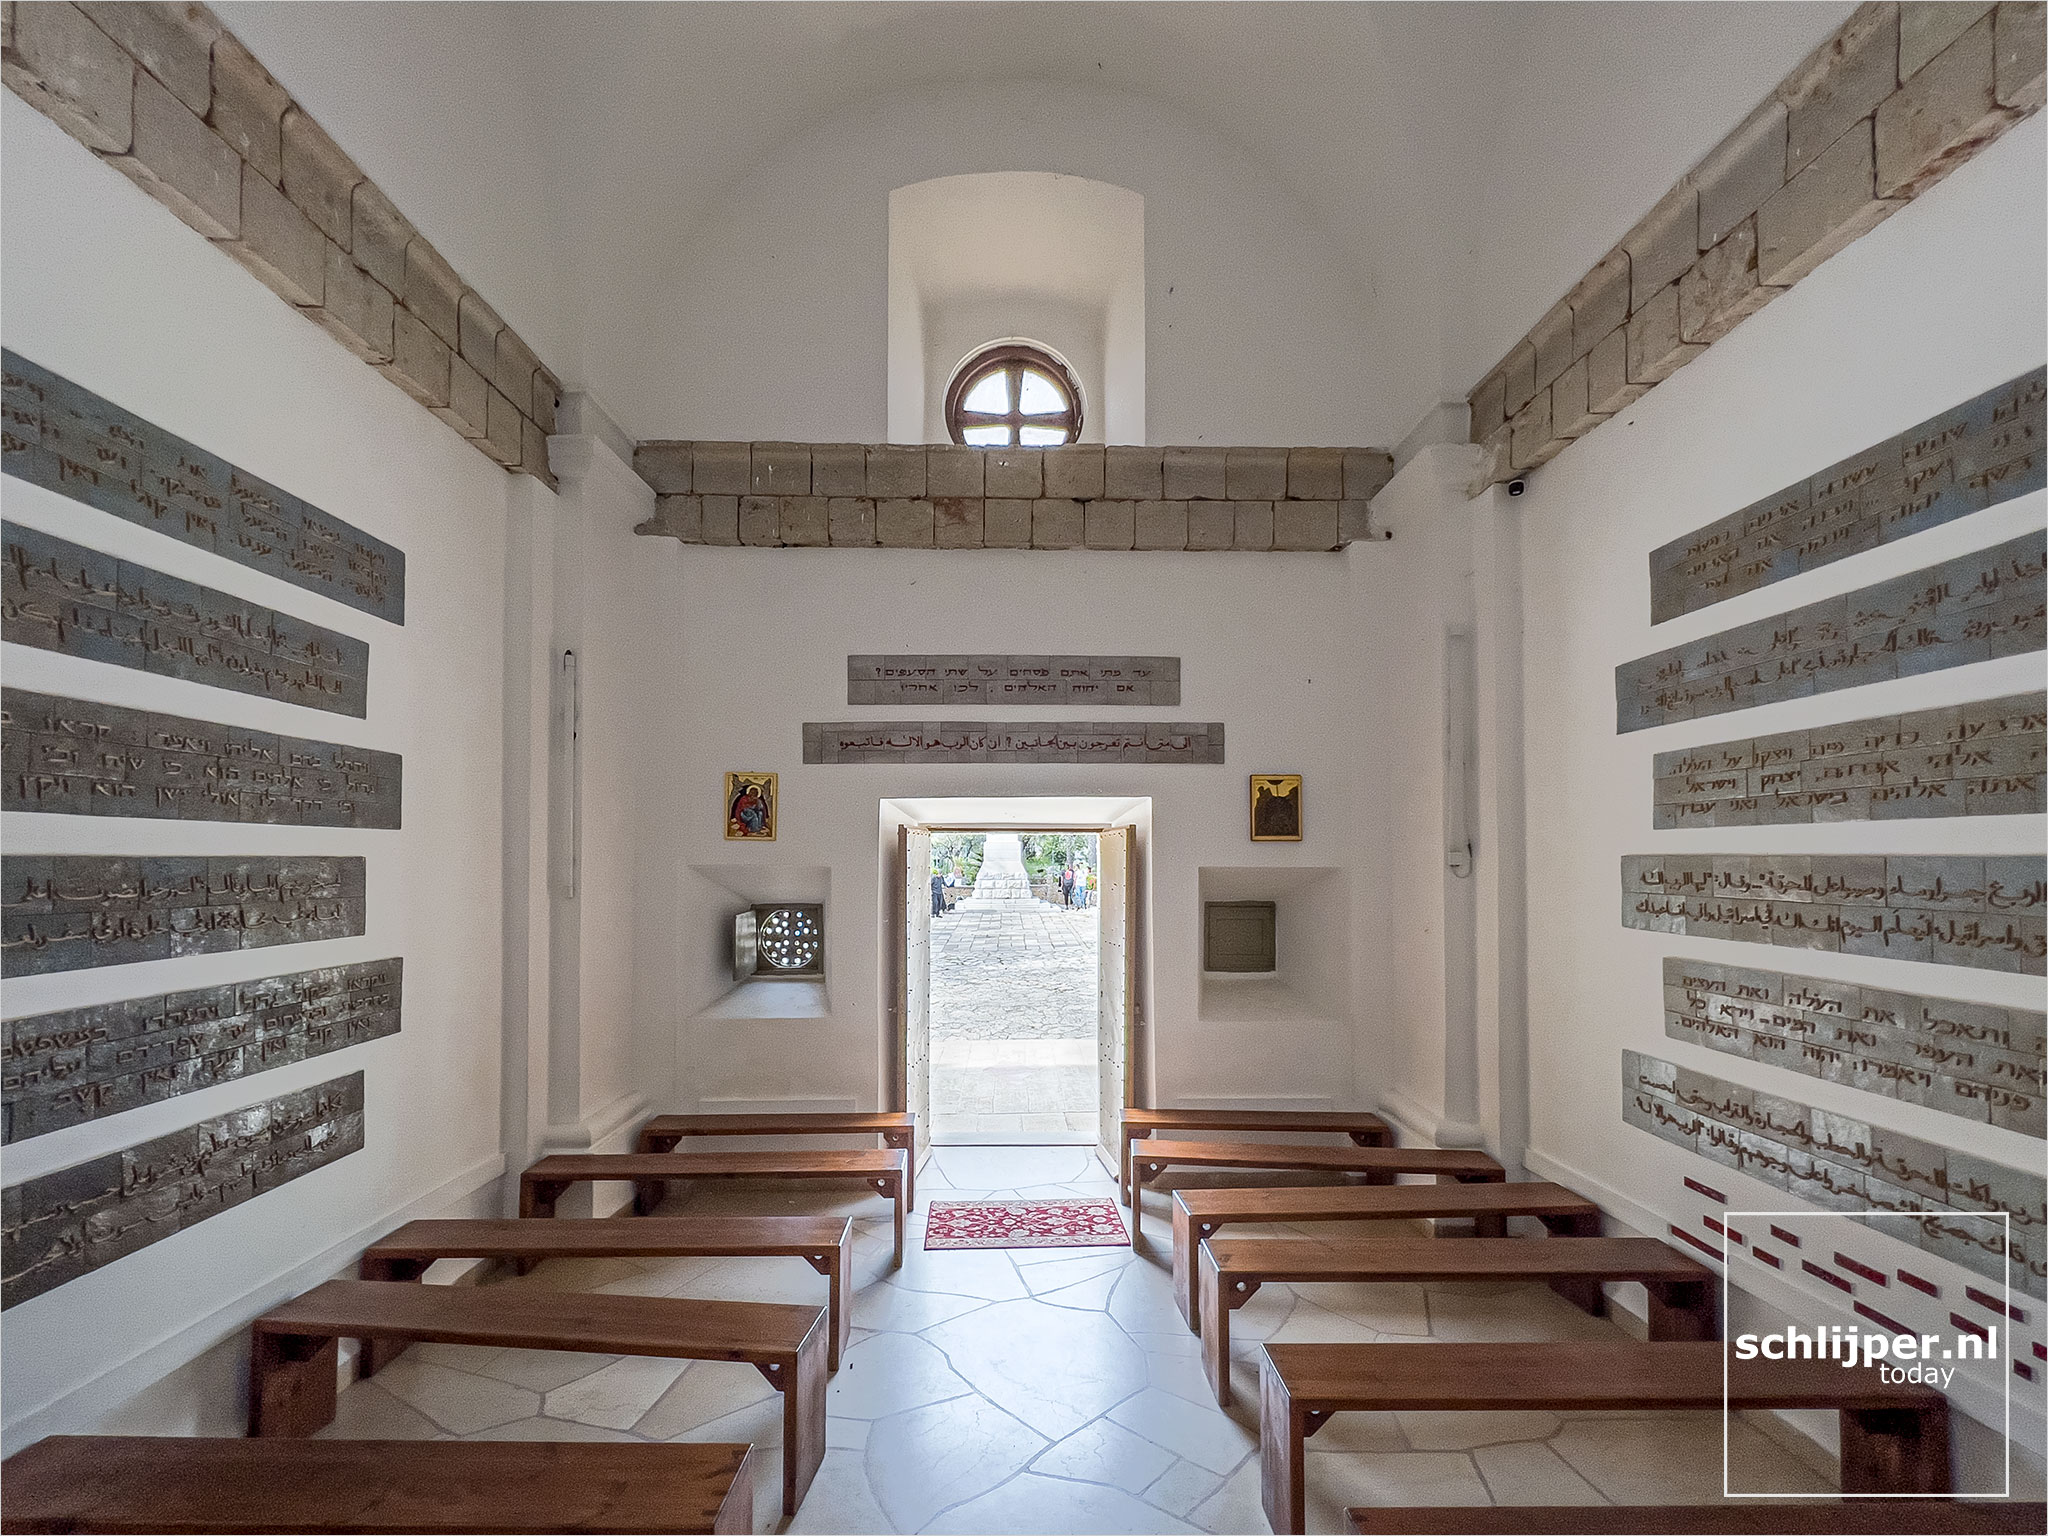 Israel, Deir Al-Mukhraqa Carmelite Monastery, 2 april 2022